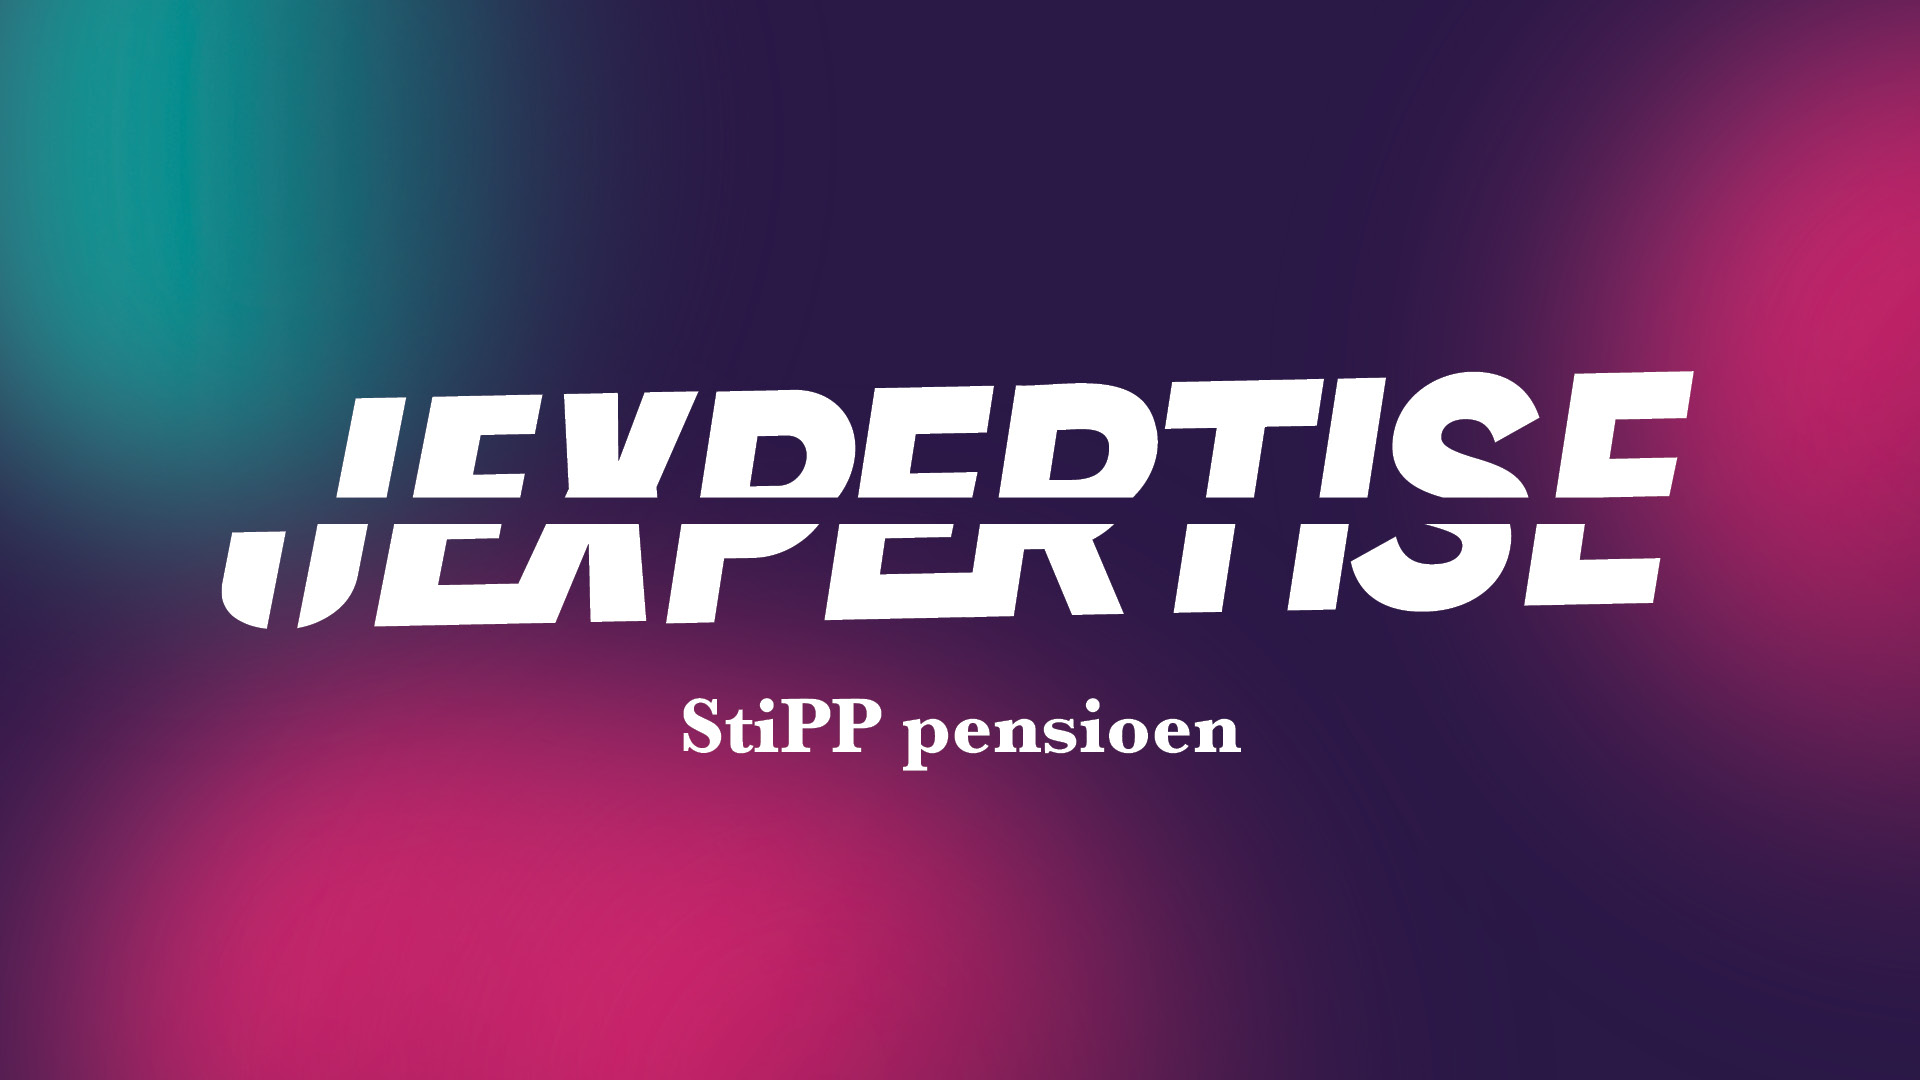 05 Website_Jexpertise_StiPP pensioen2